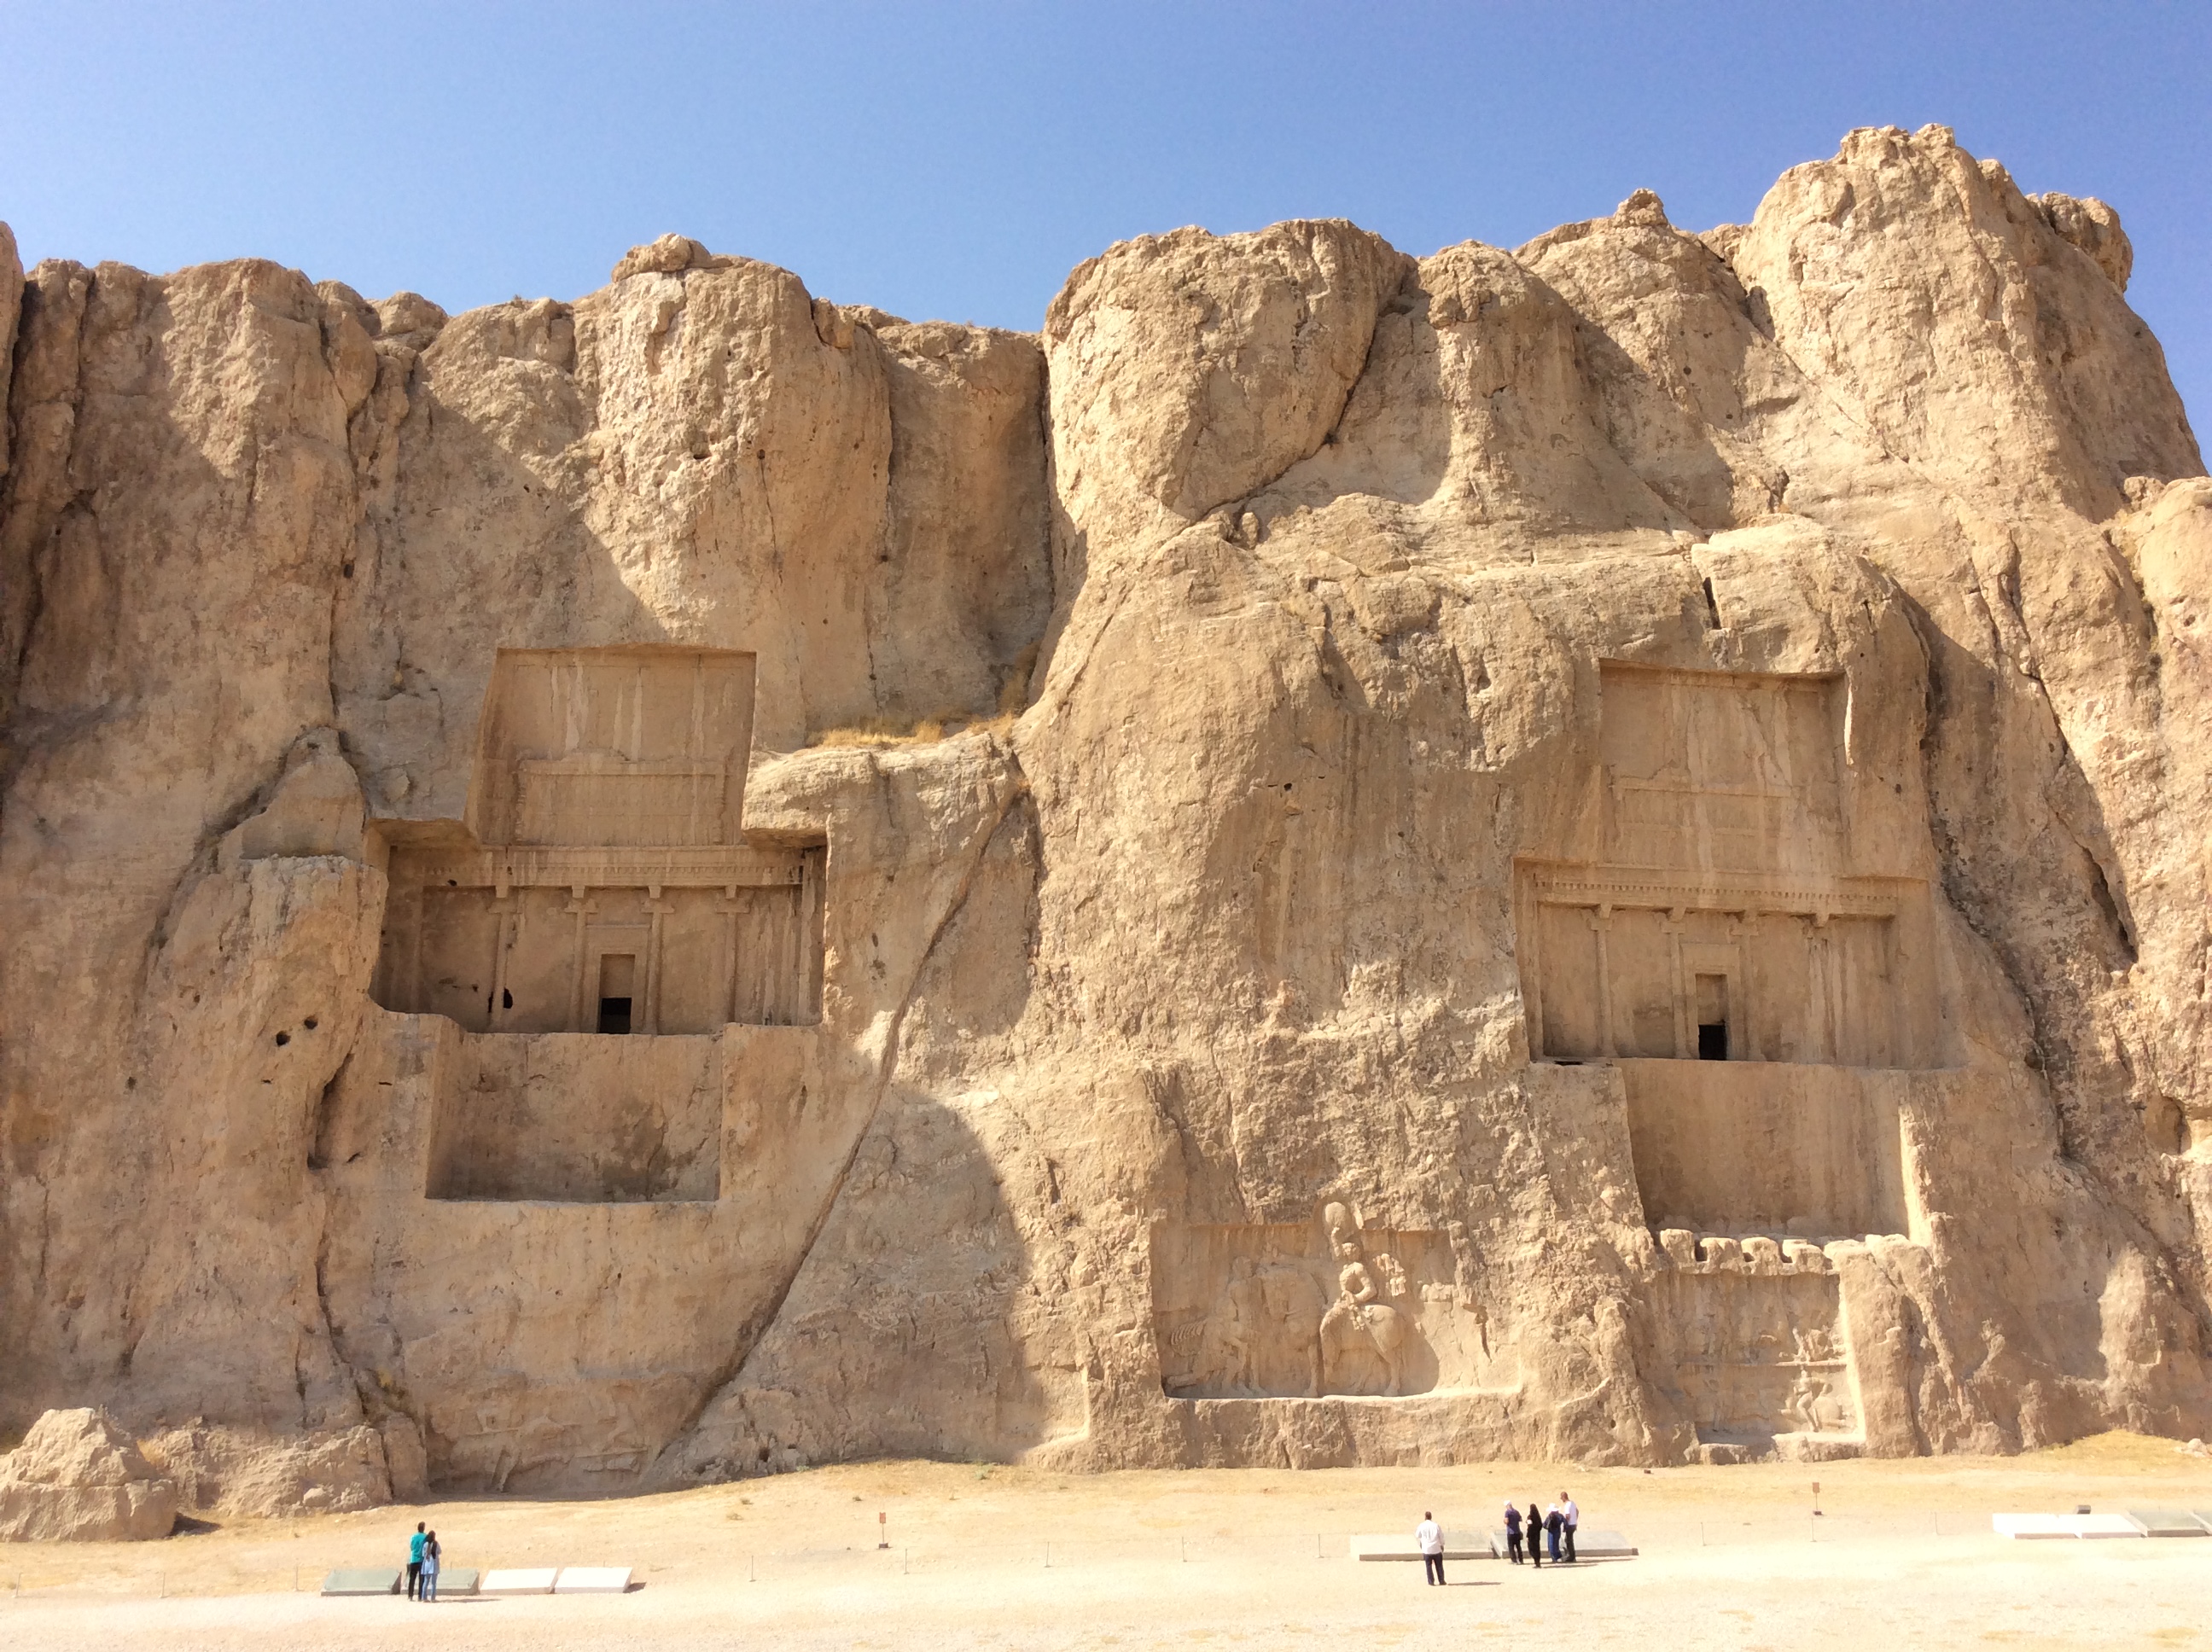 Naqsh-e-Rostam-ancient tombs of Darius the Great and Xerses-near Shiraz